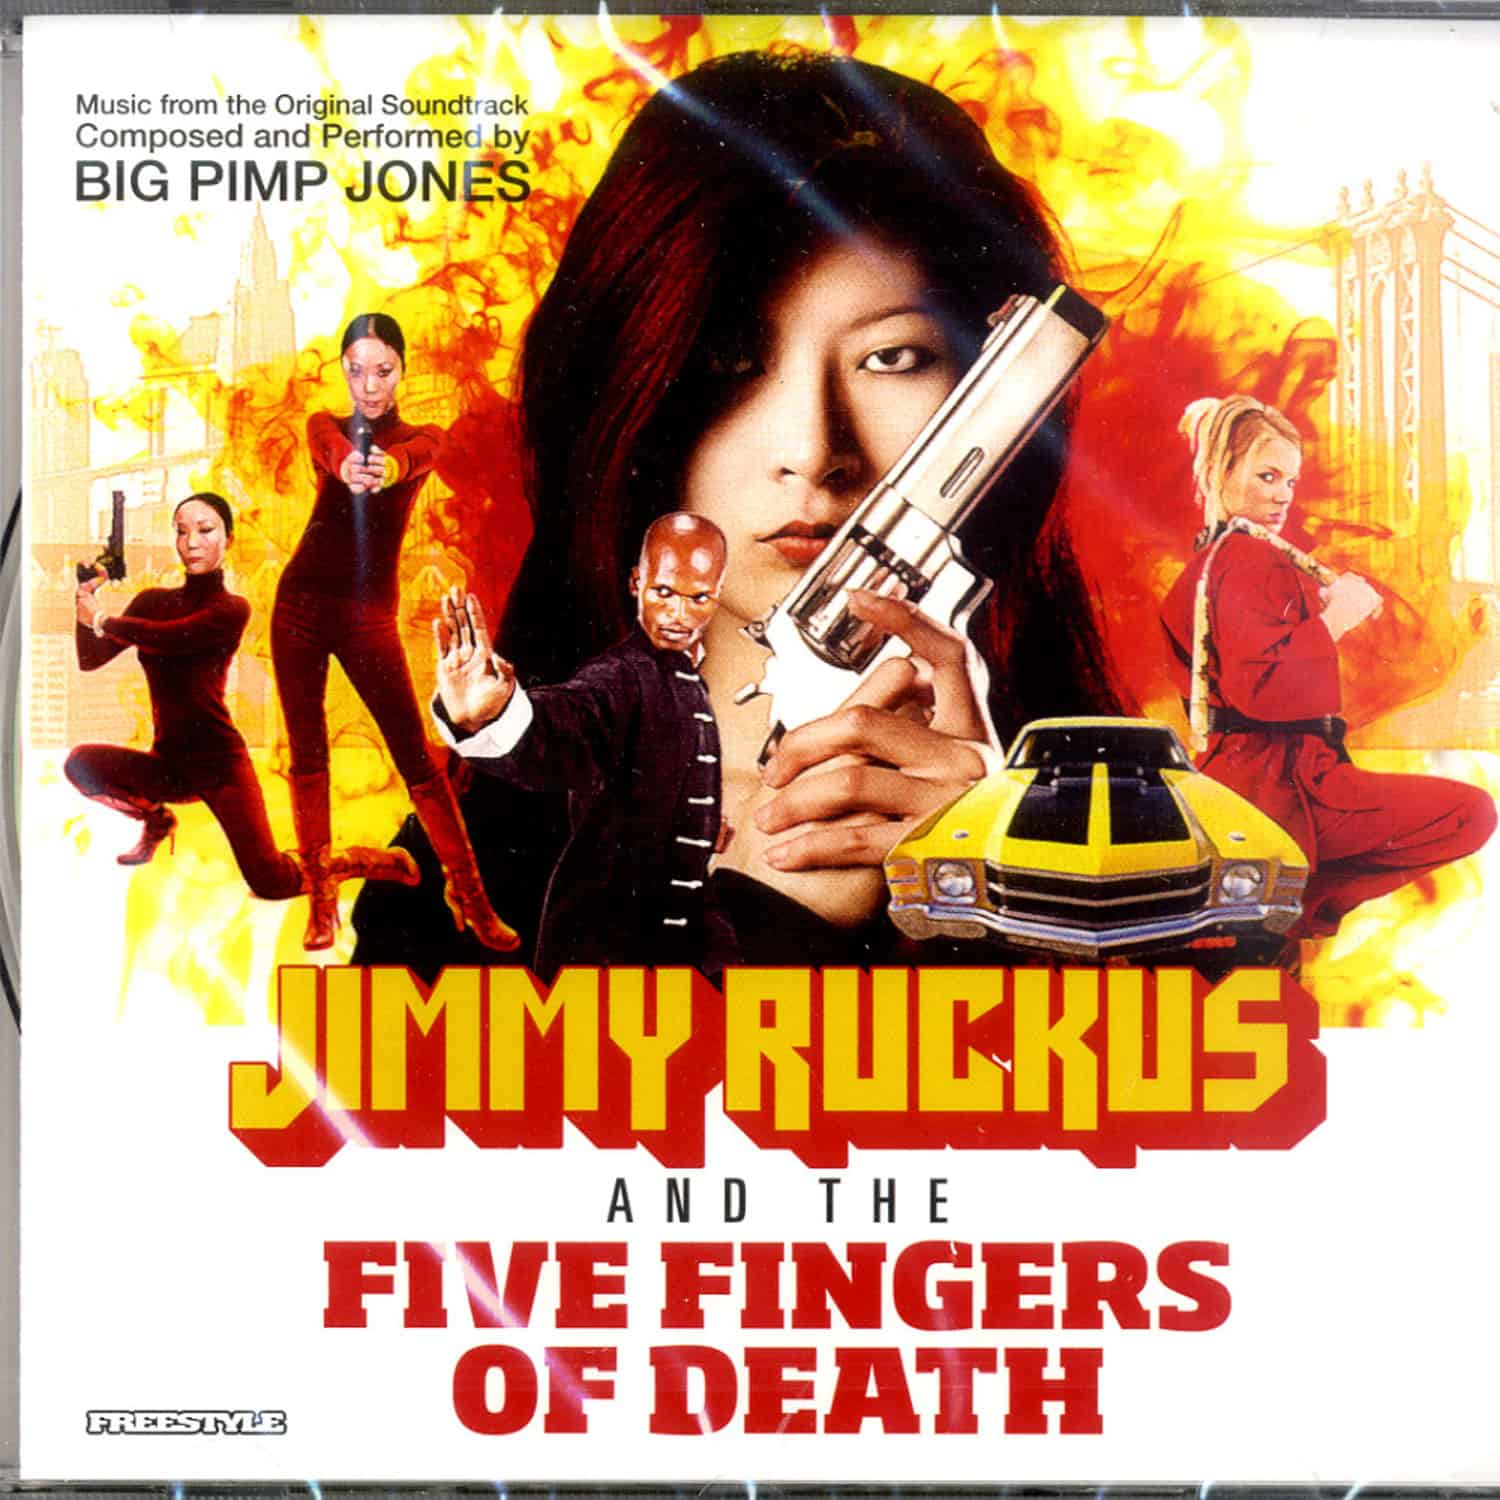 Big Pimp Jones - JIMMY RUCKUS AND THE FIVE FINGERS OF DEATH 